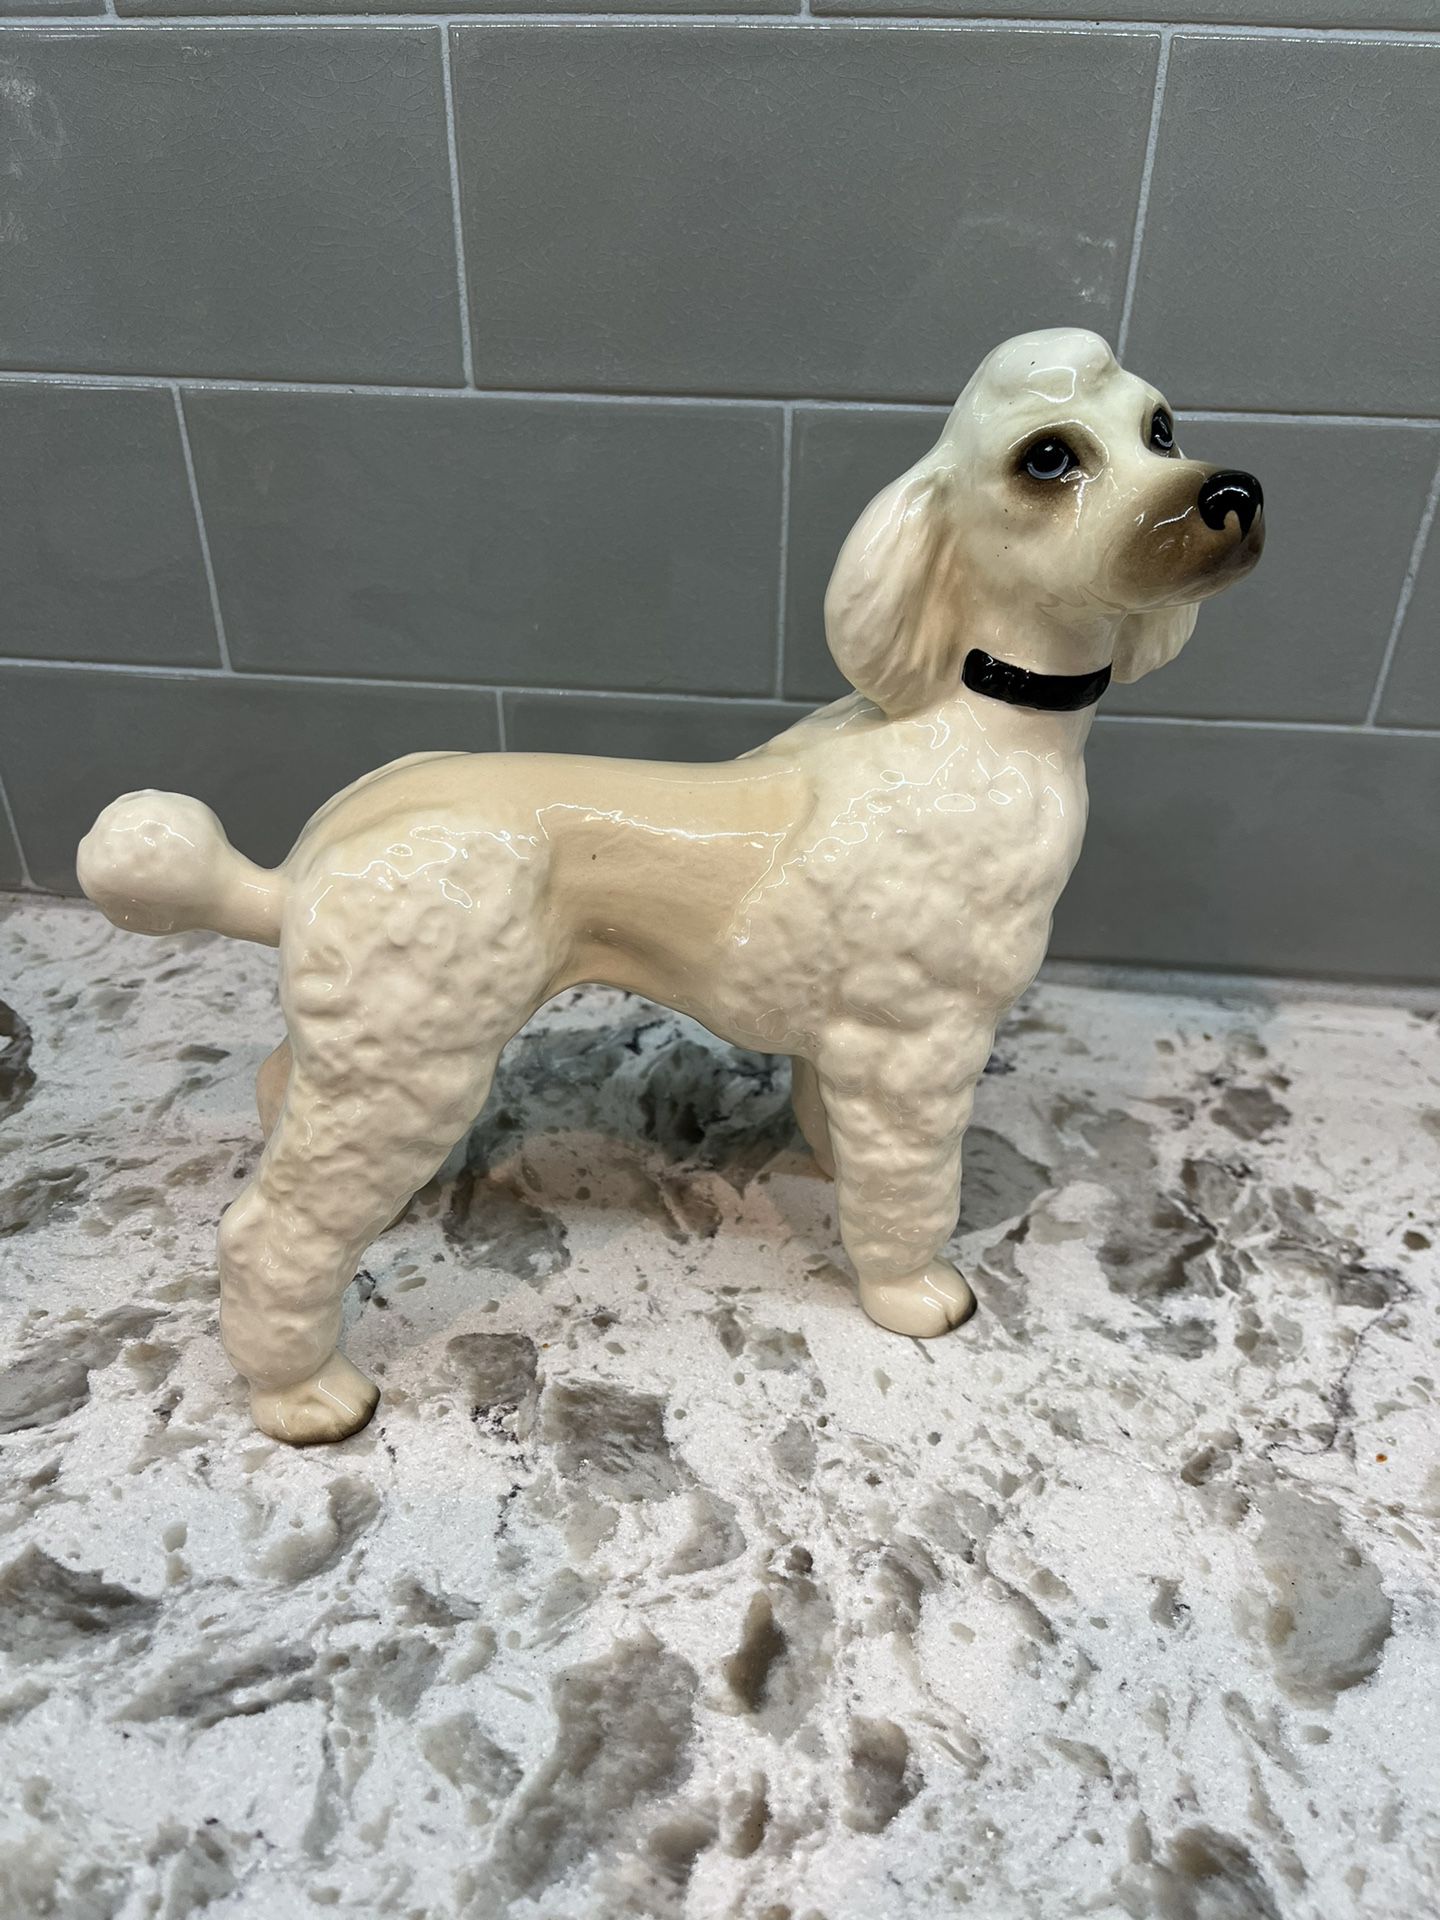 Antique Porcelain Poodle Could Be Coopercraft